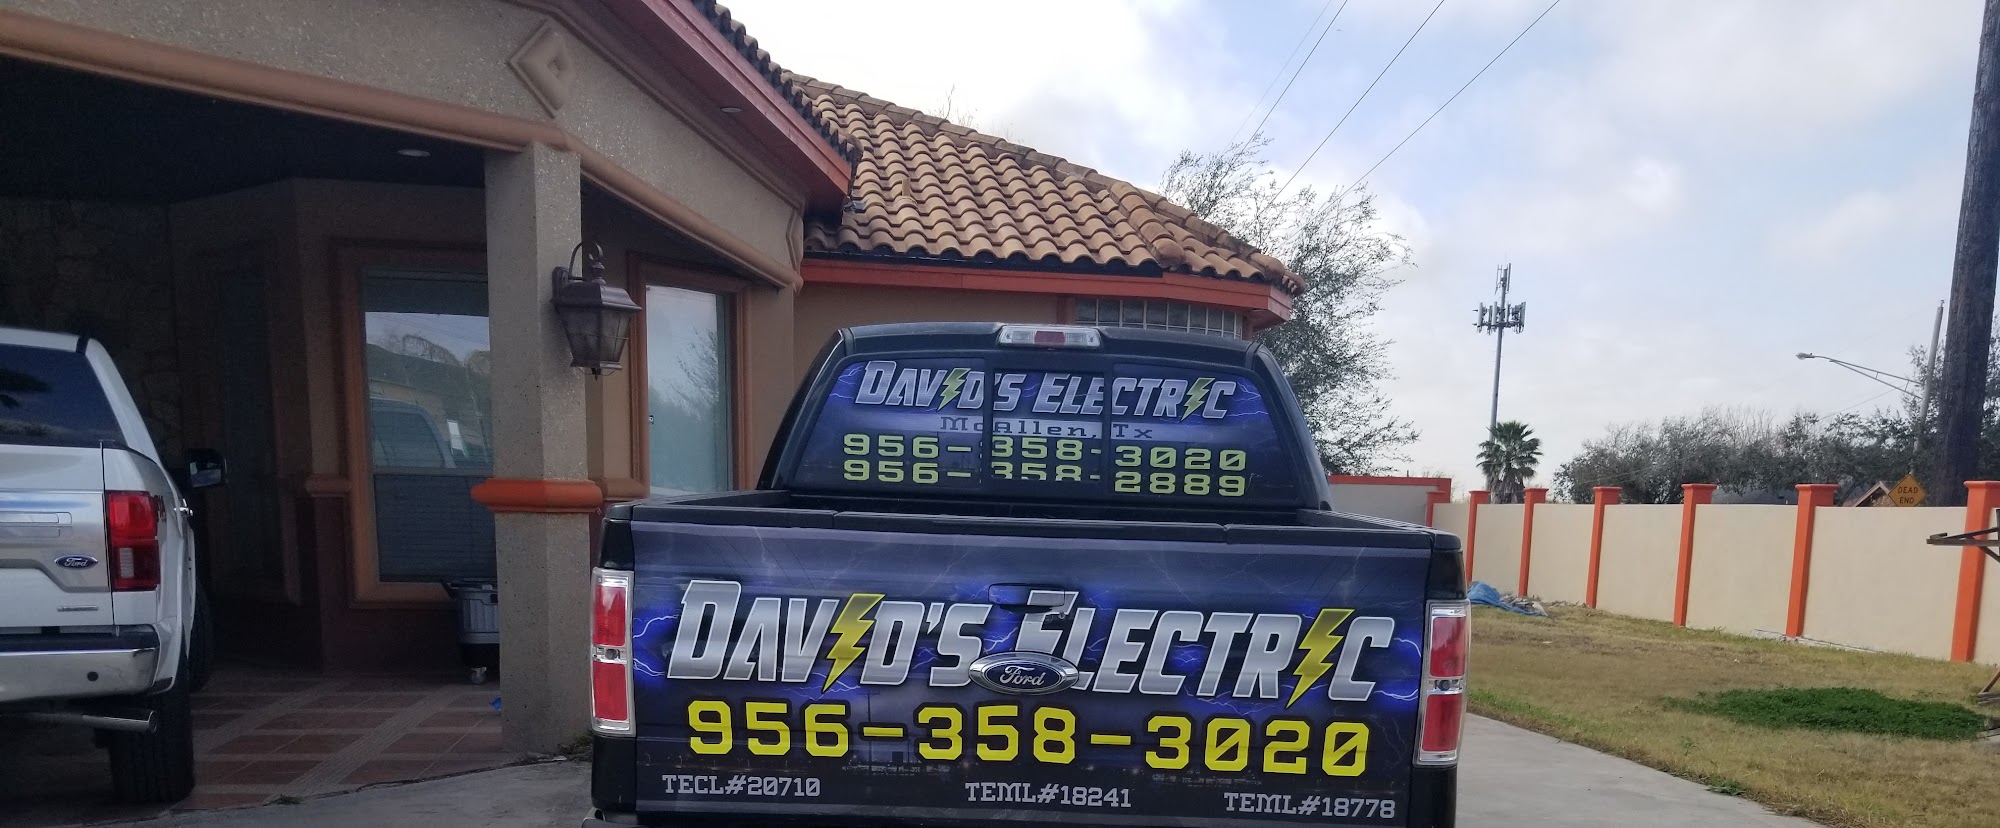 David's Electric